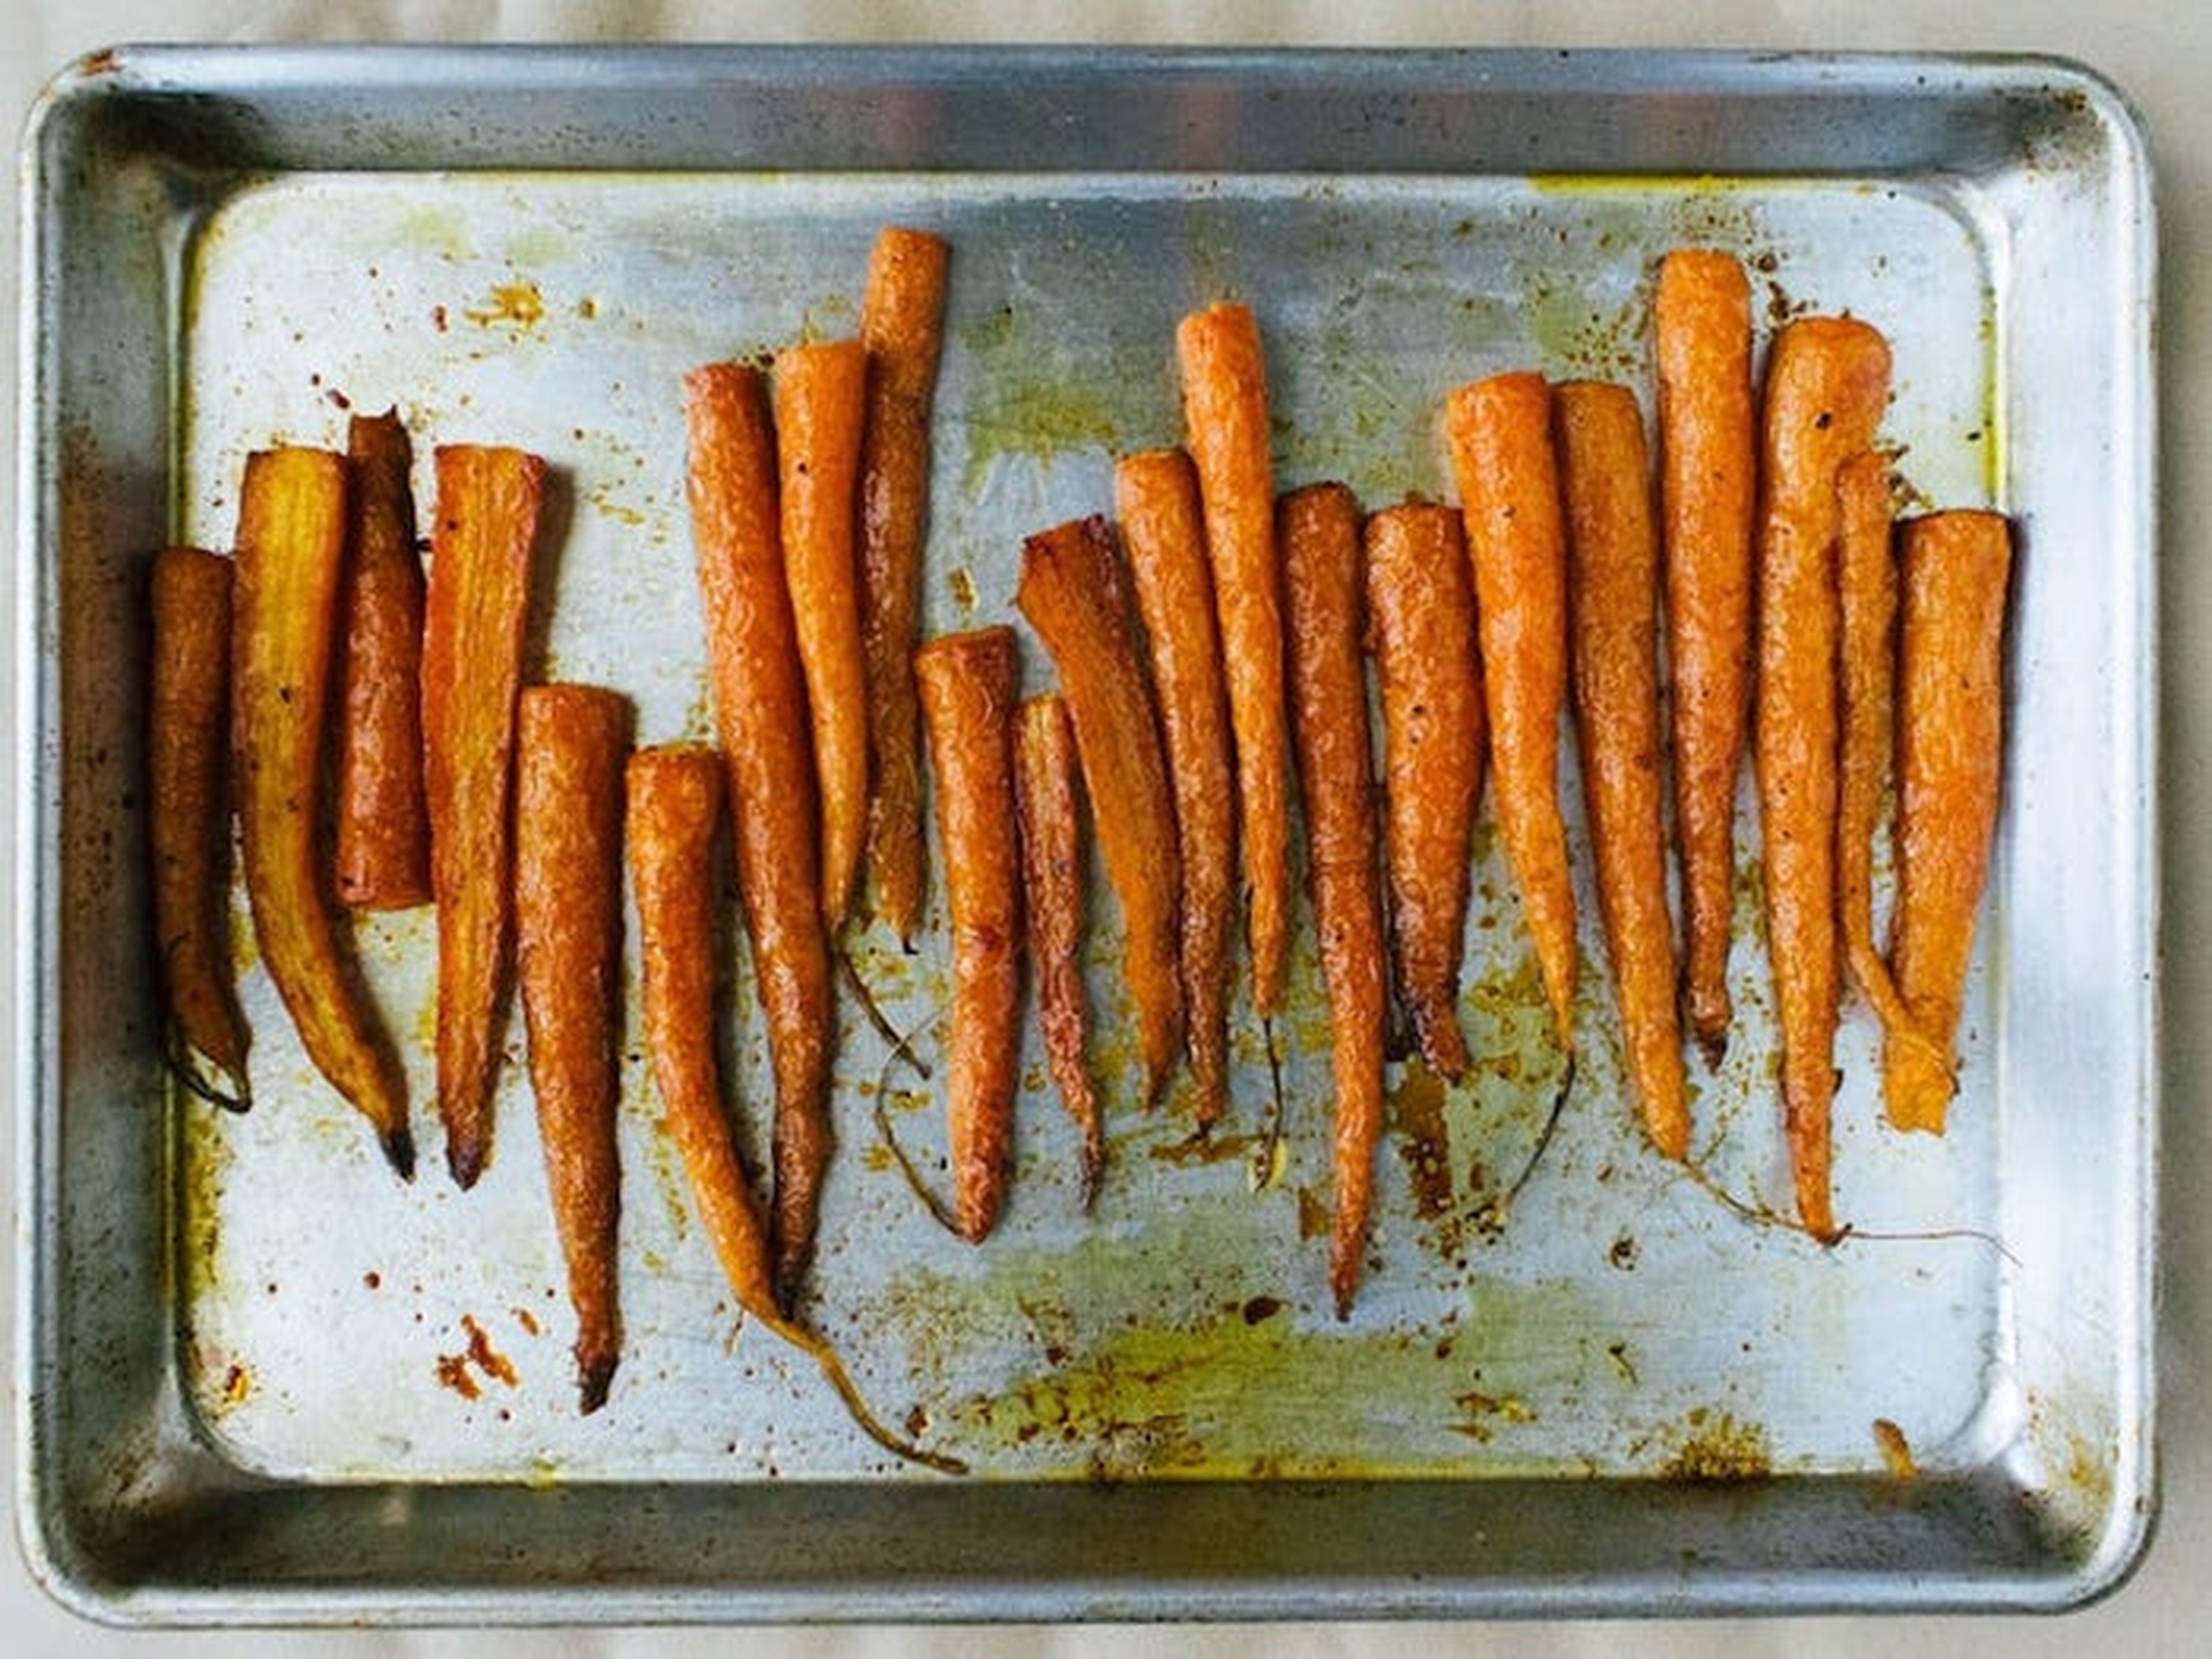 Las zanahorias tienen 53 calorías.